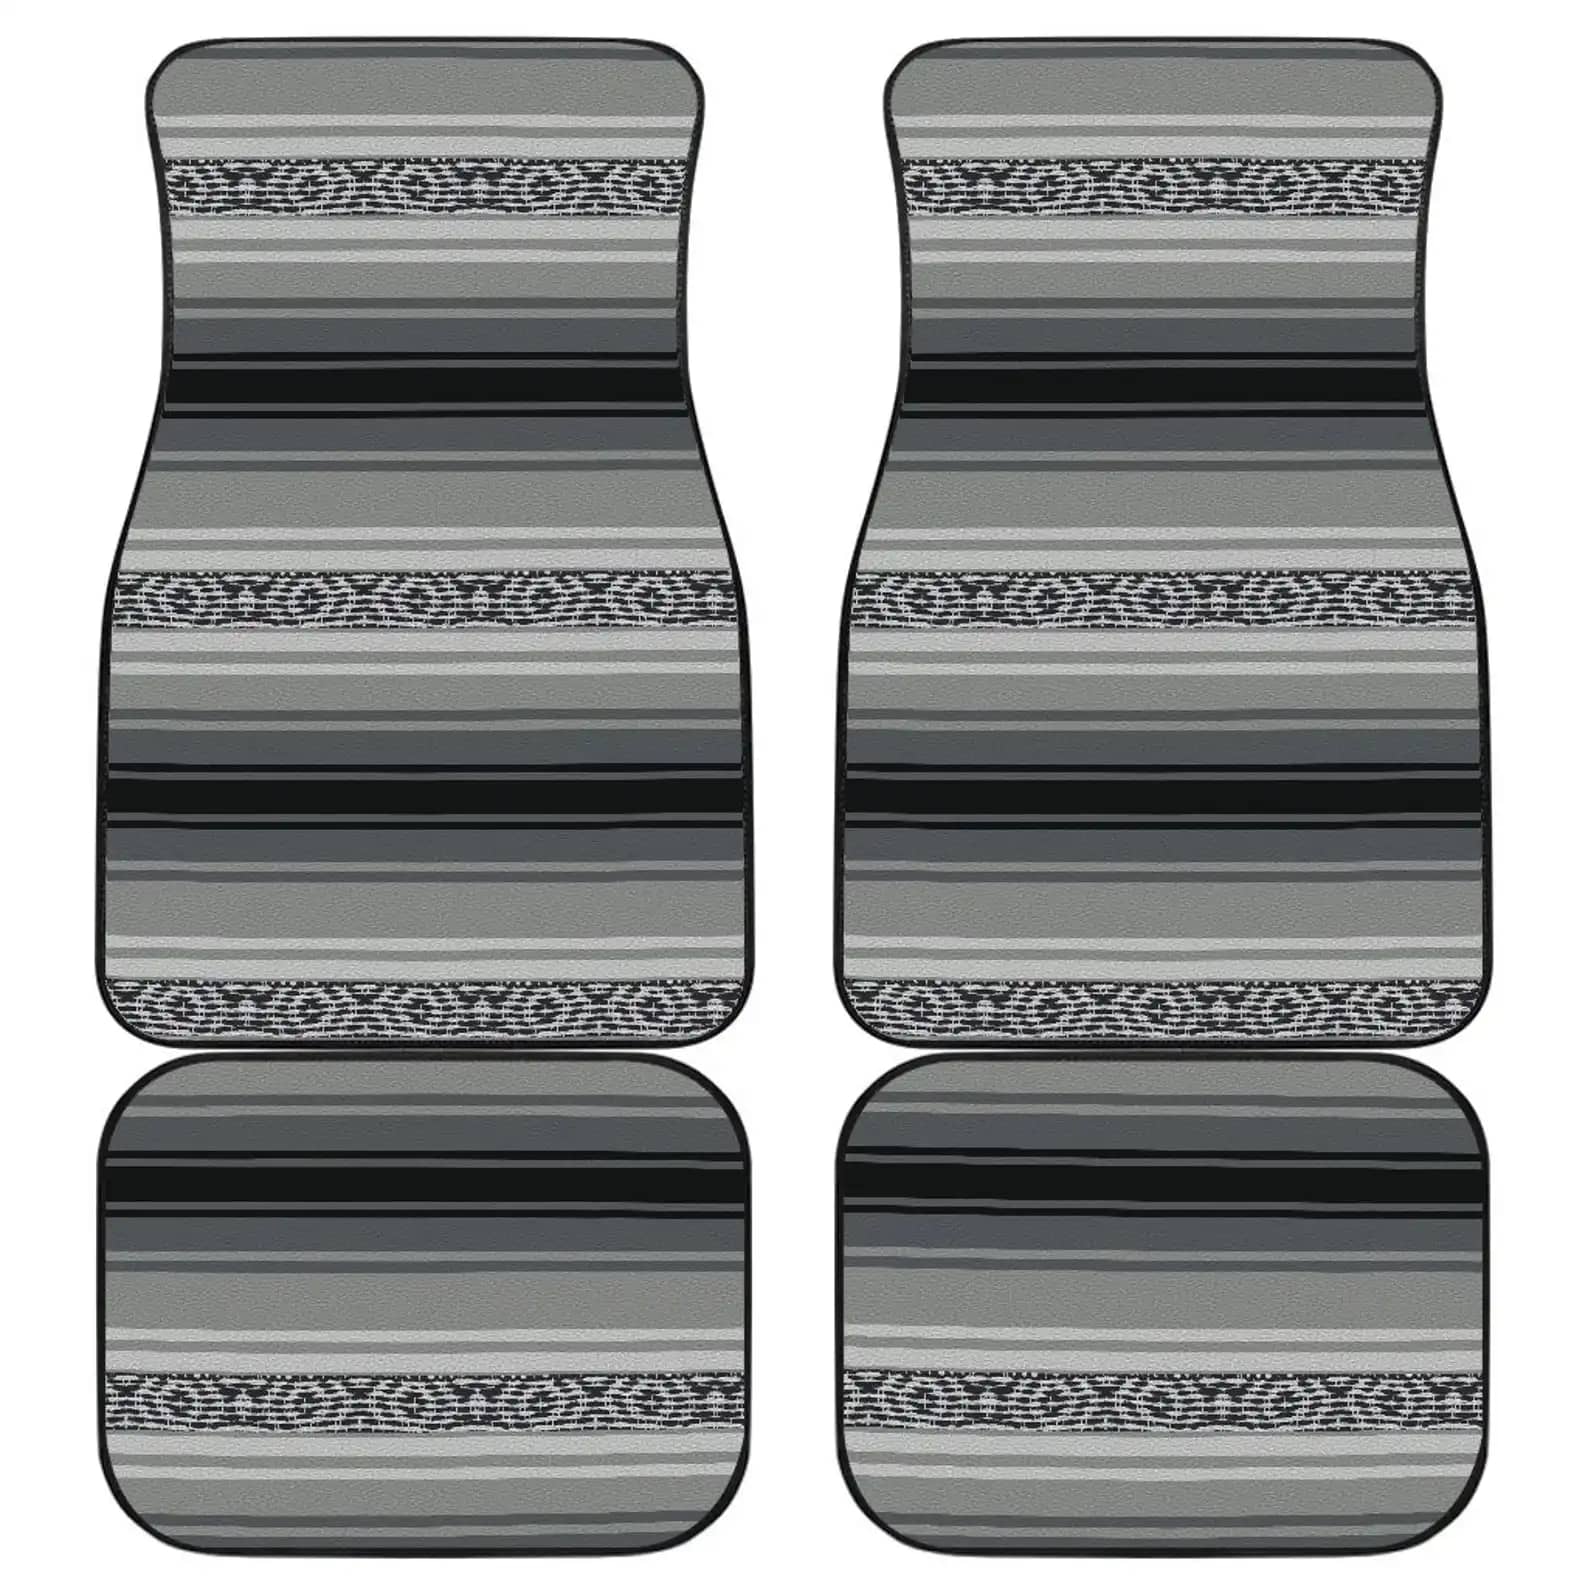 Mexican Blanket Gray Black Pattern Car Floor Mats